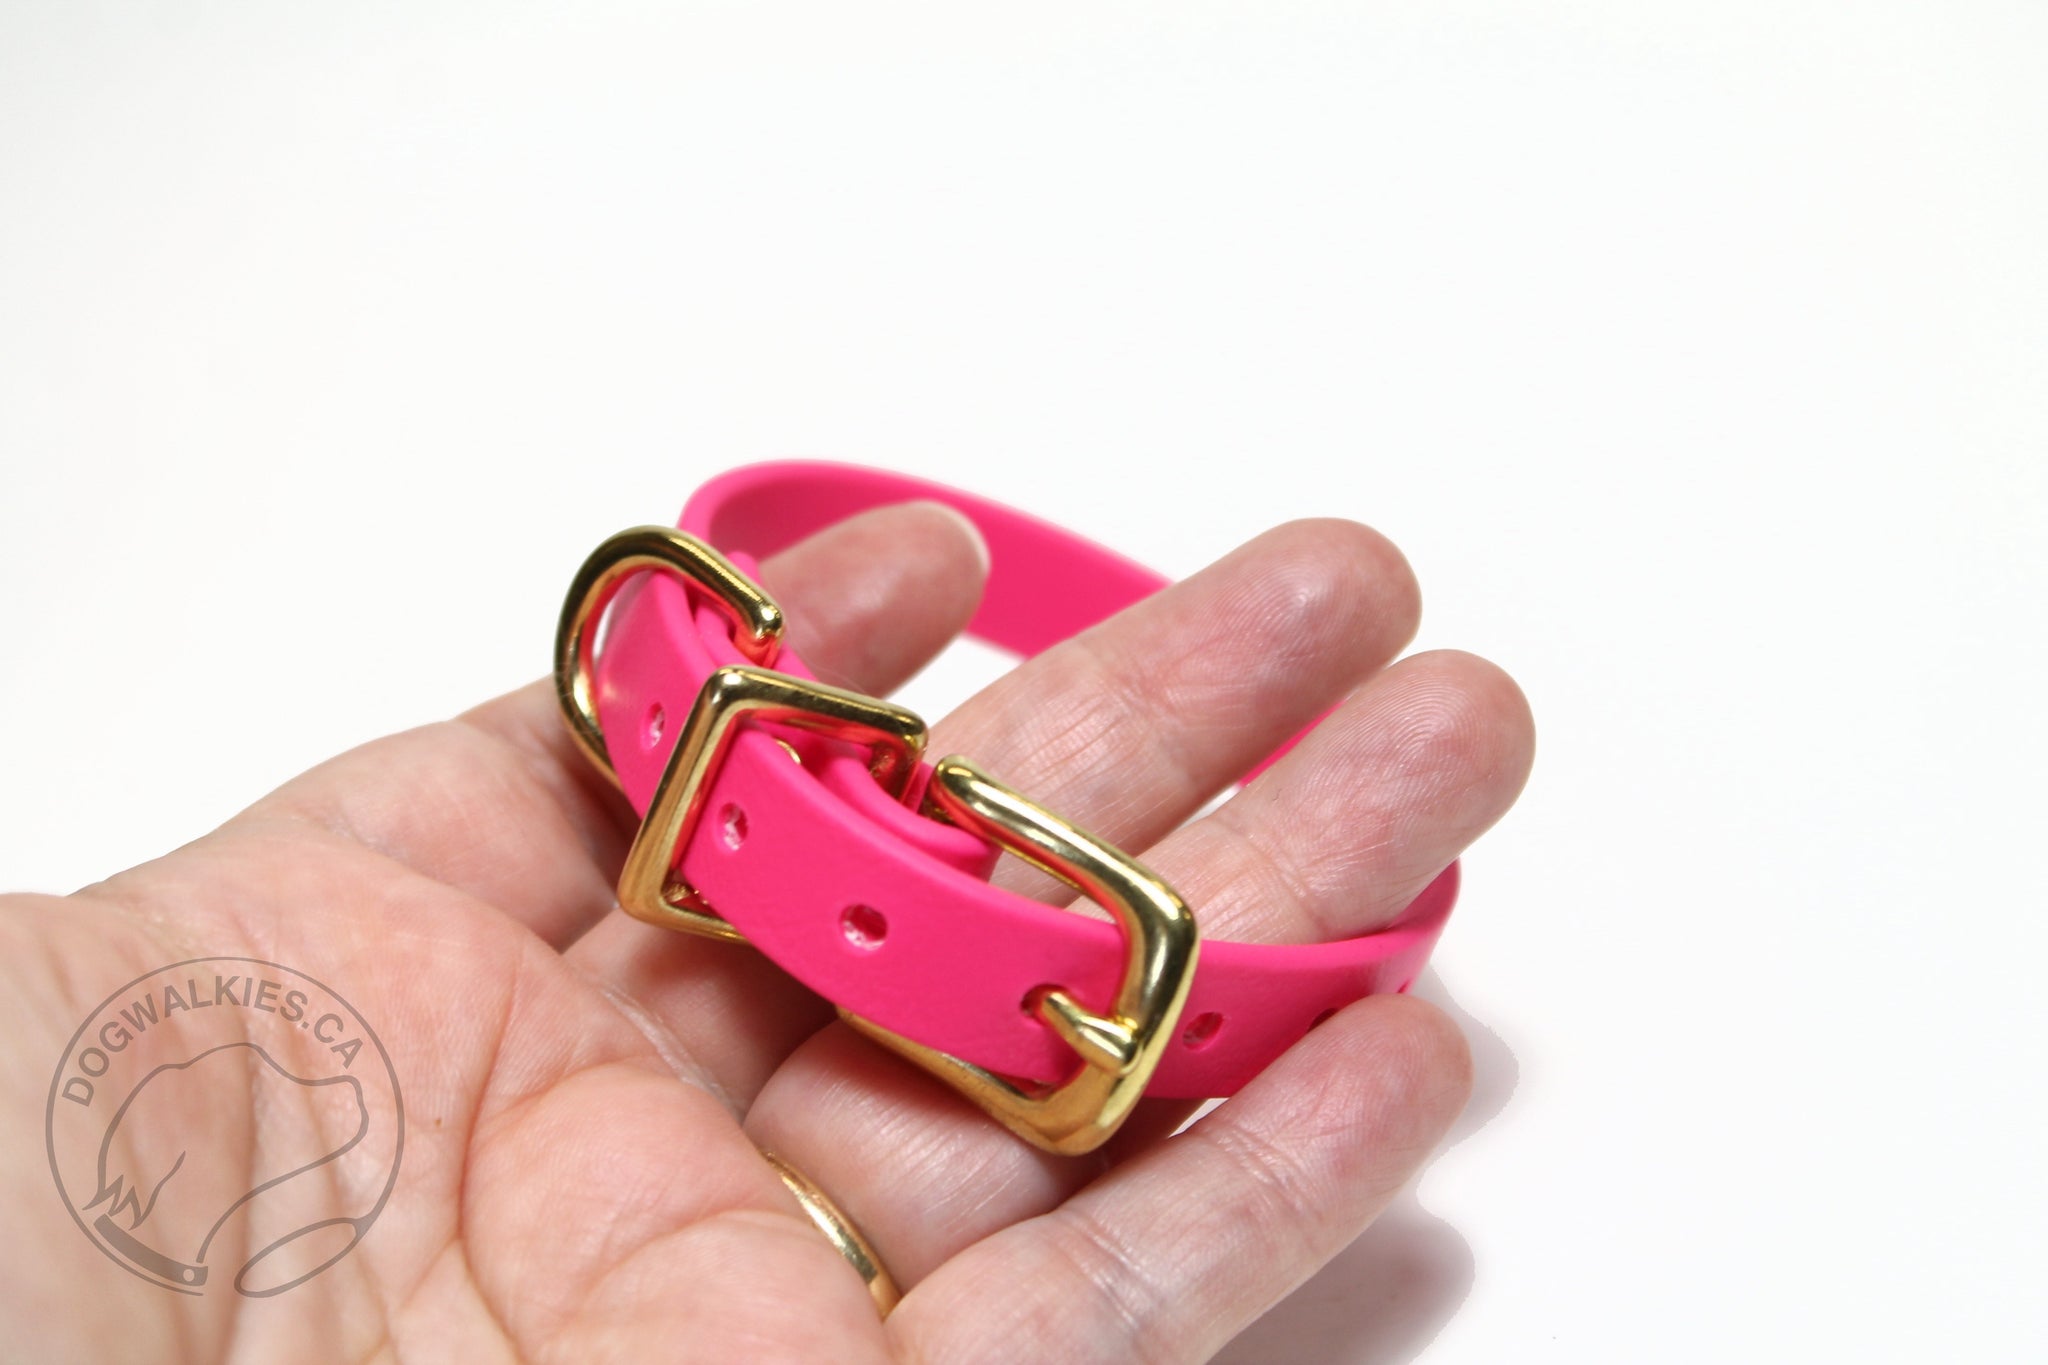 Fuchsia Pink Biothane Small Dog Collar - 1/2" (12mm) wide